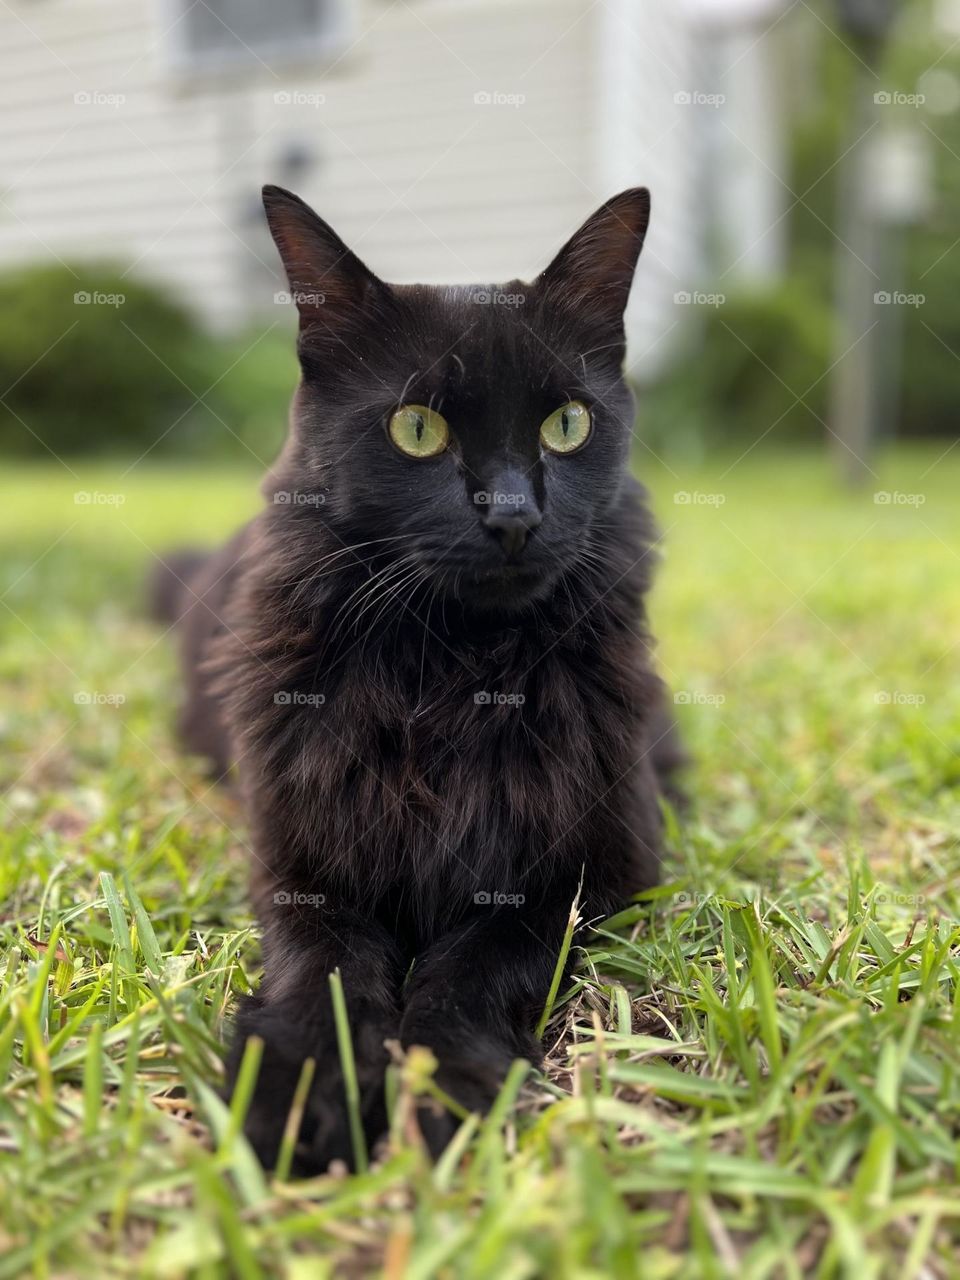 Black cat in the grass 